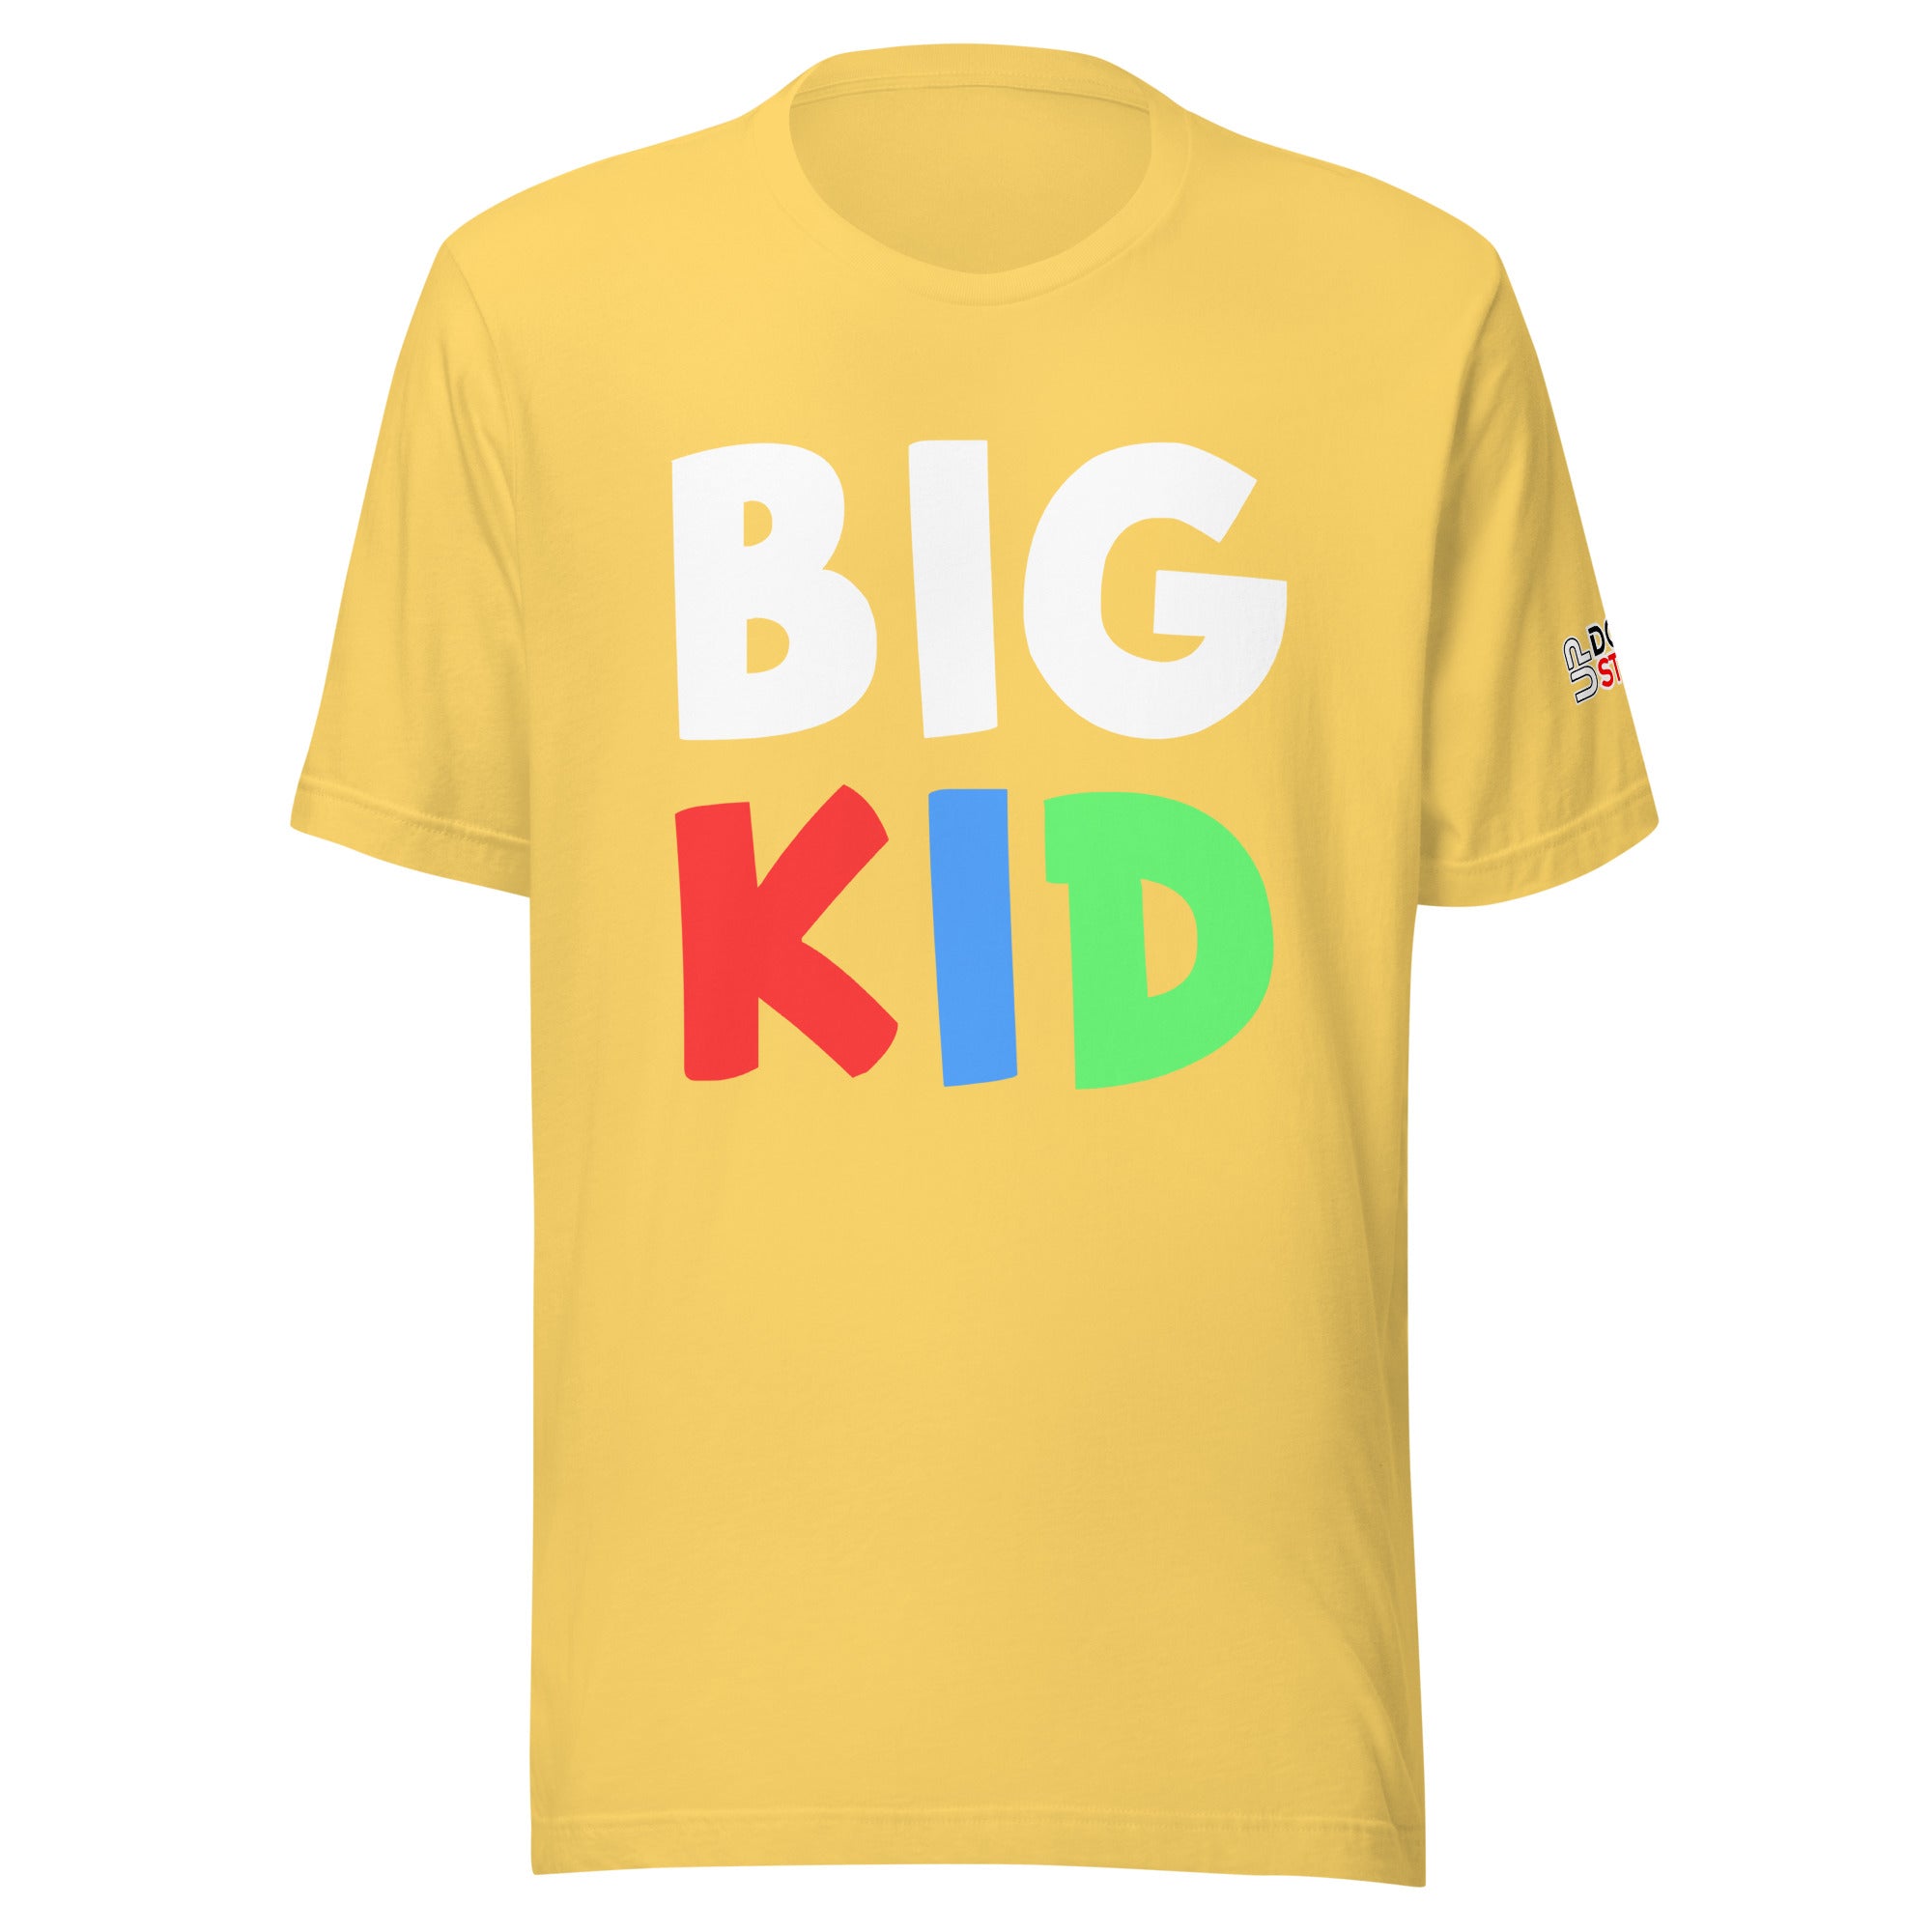 Big Kid / T-Shirt